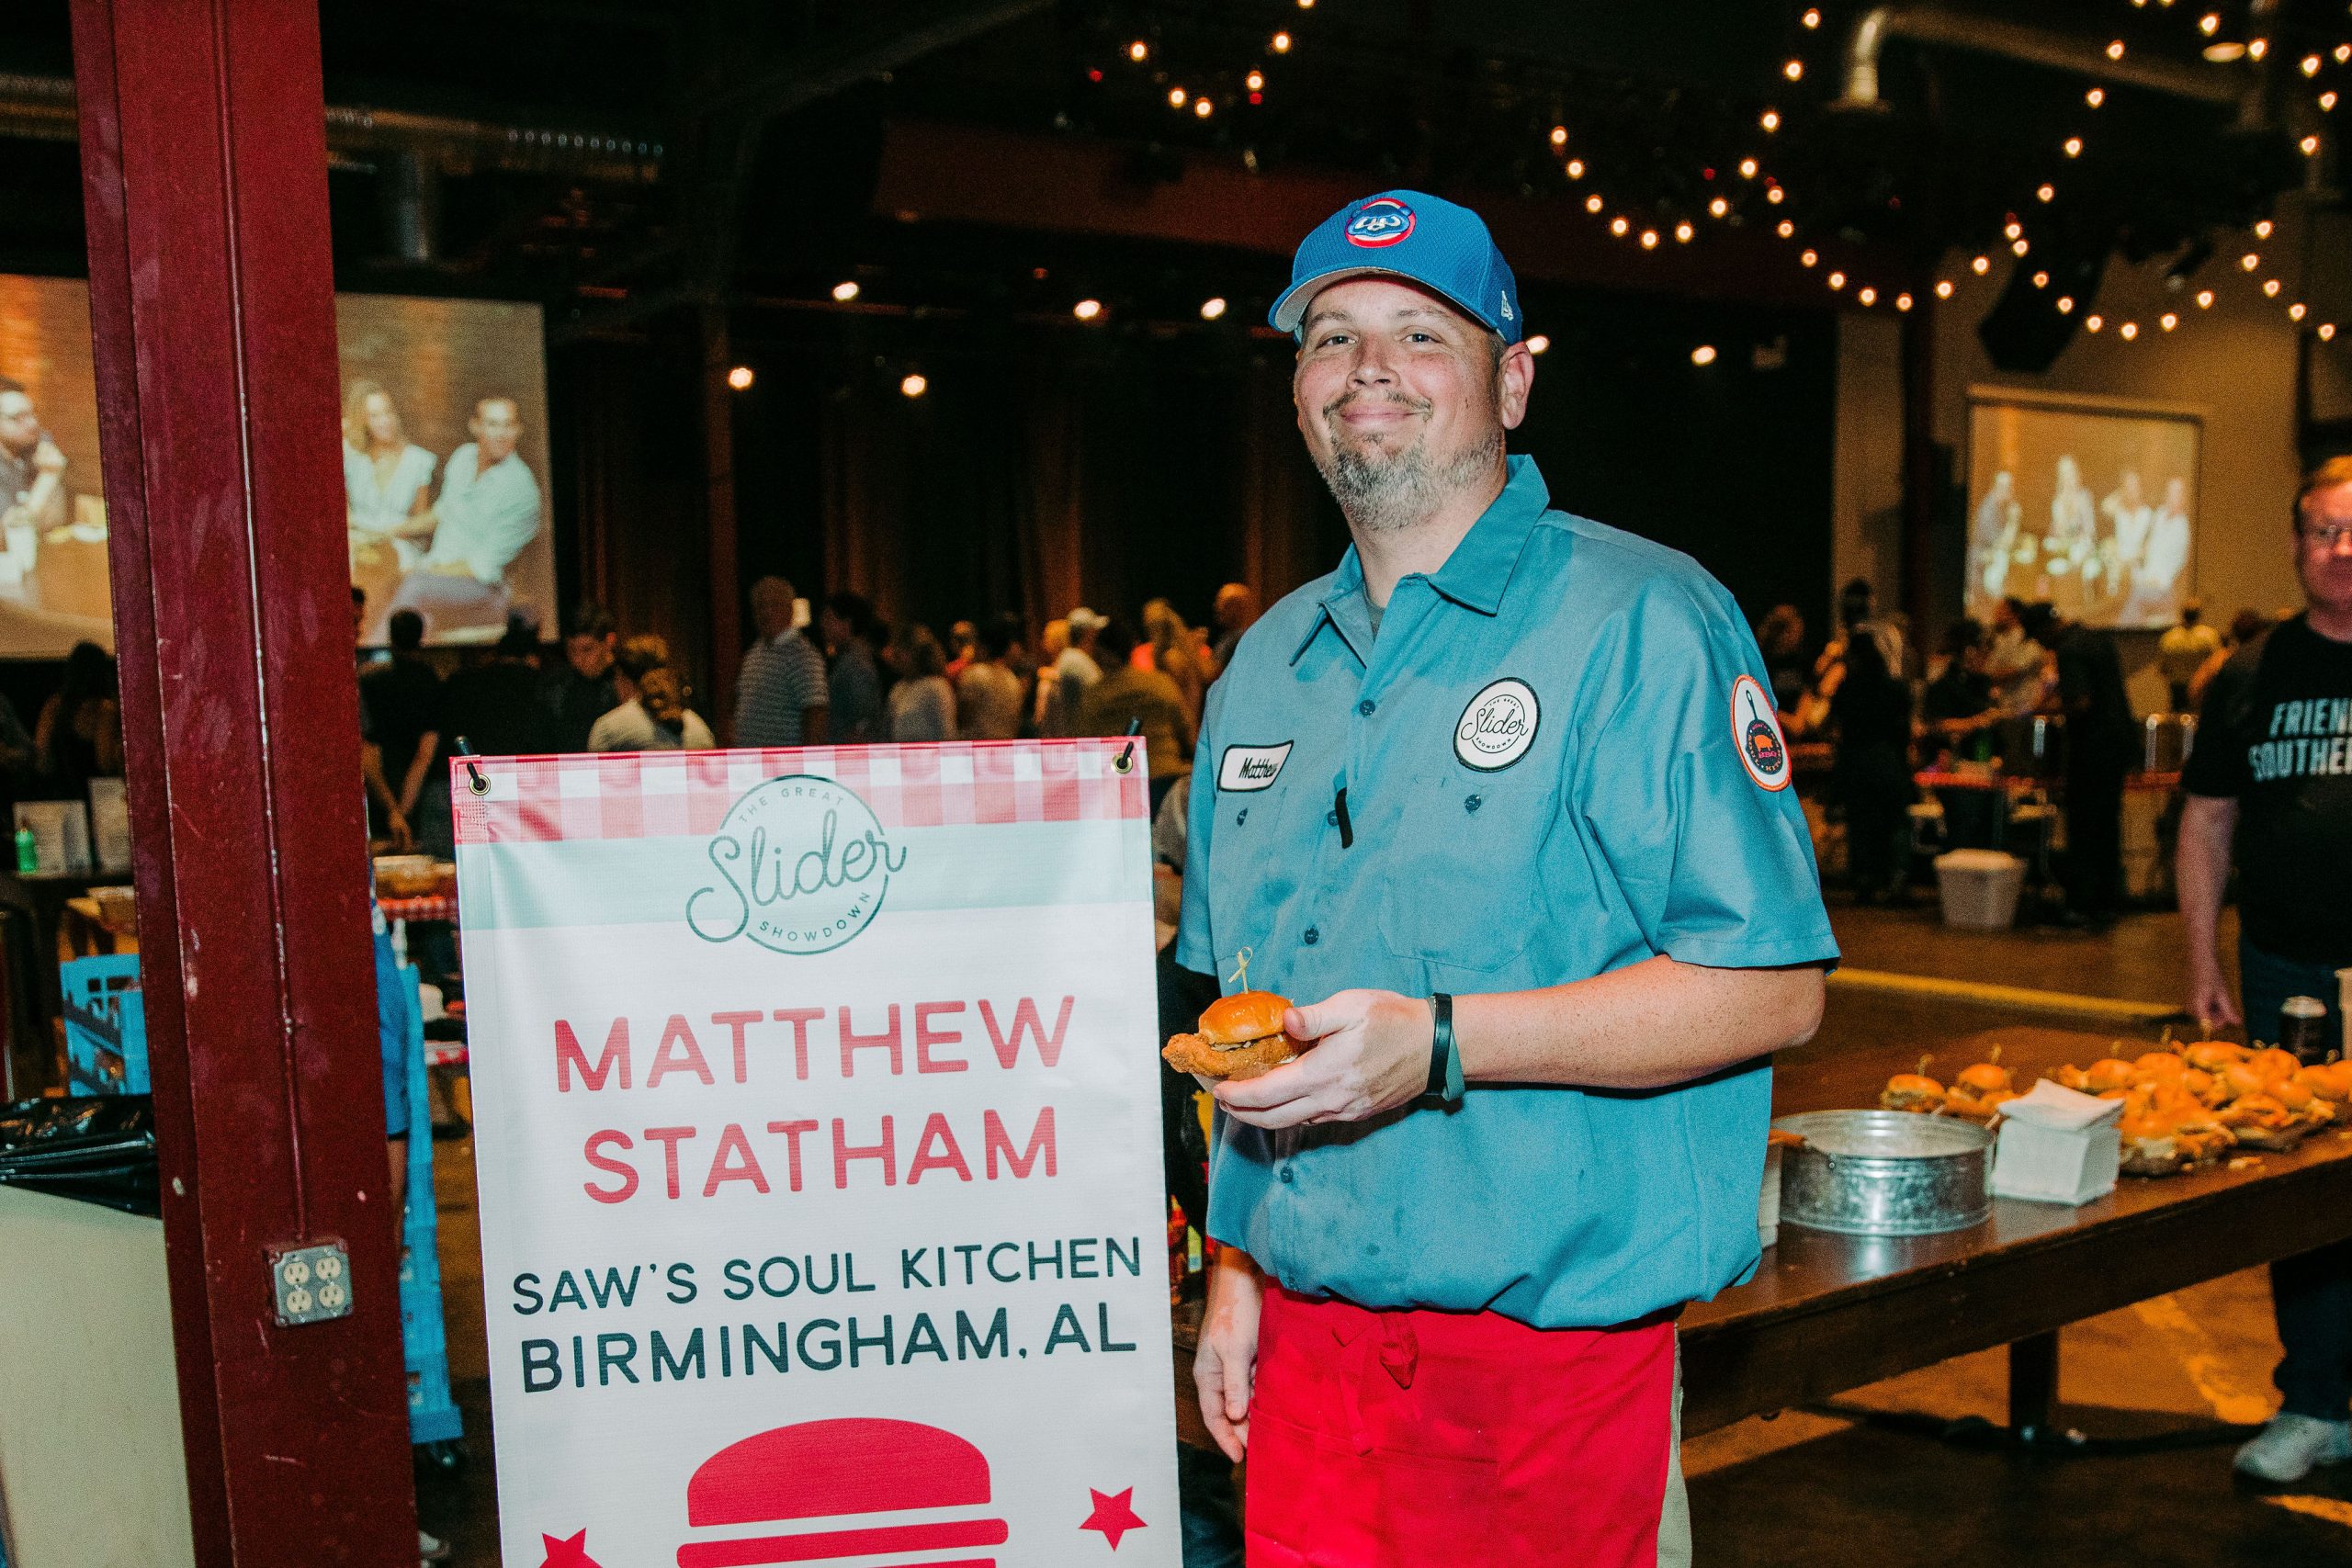 Chef Matthew Statham from Saw's Soul Kitchen